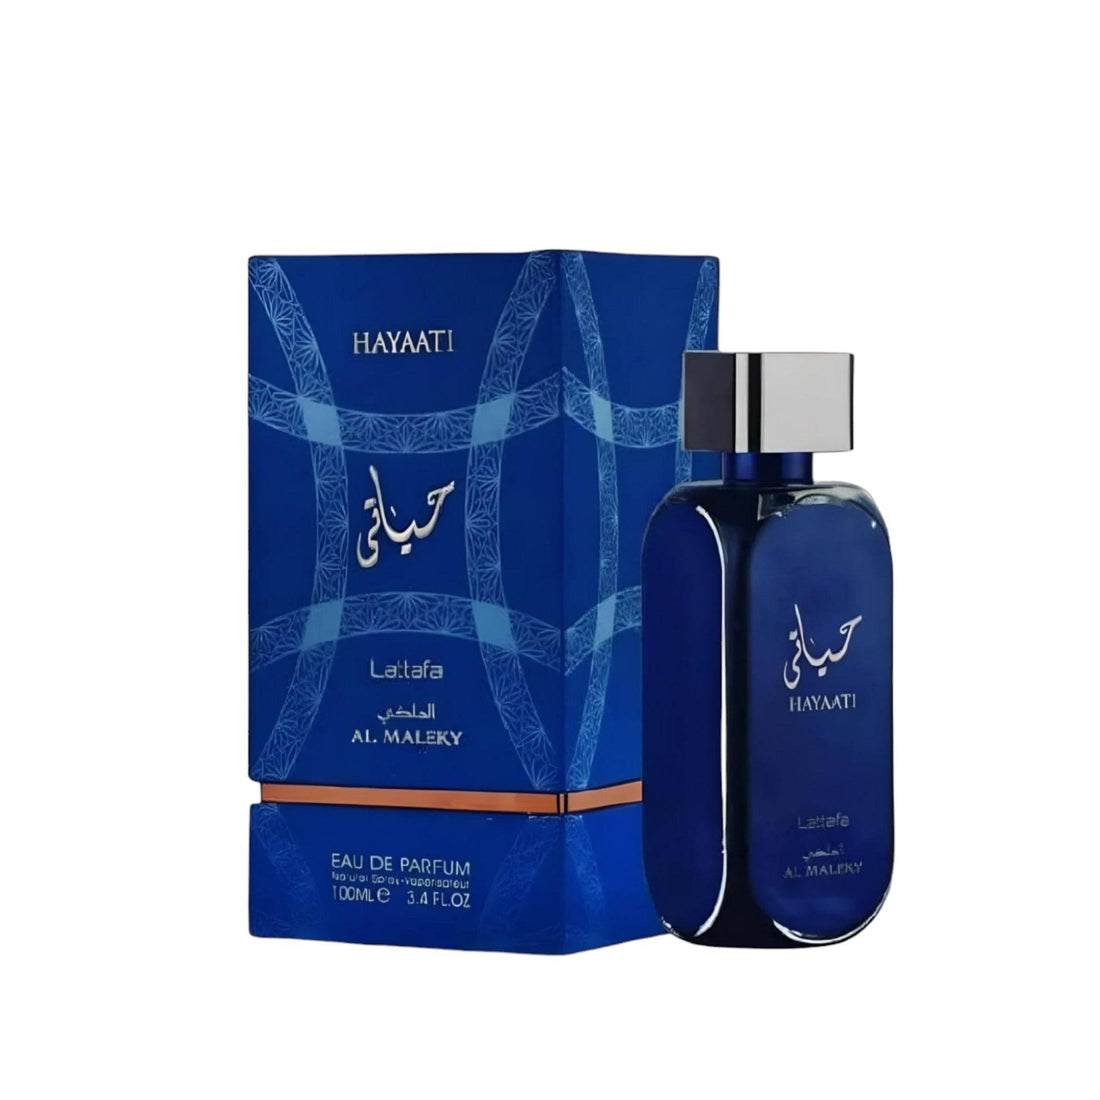 Luxurious packaging of Hayaati Al-Maleky Refreshing Oceanic EDP by Lattafa